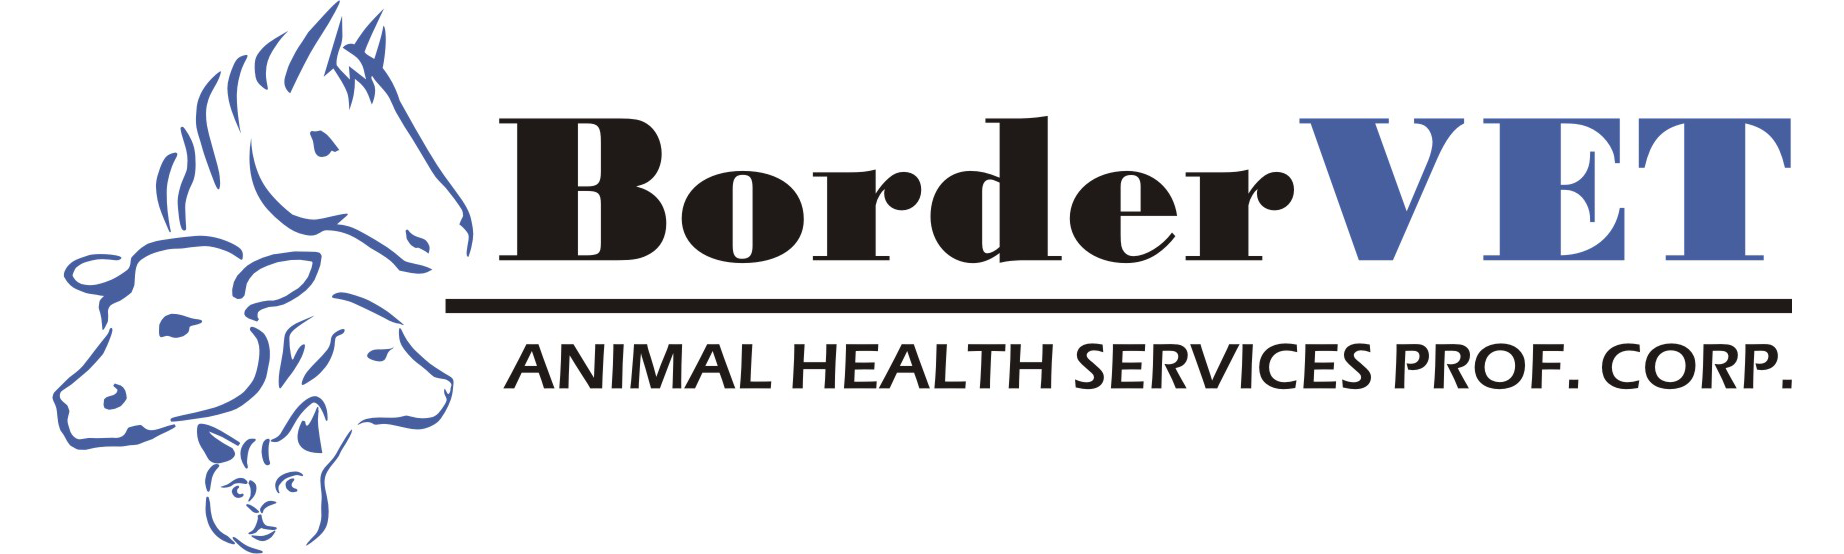 BorderVET Animal Health Services